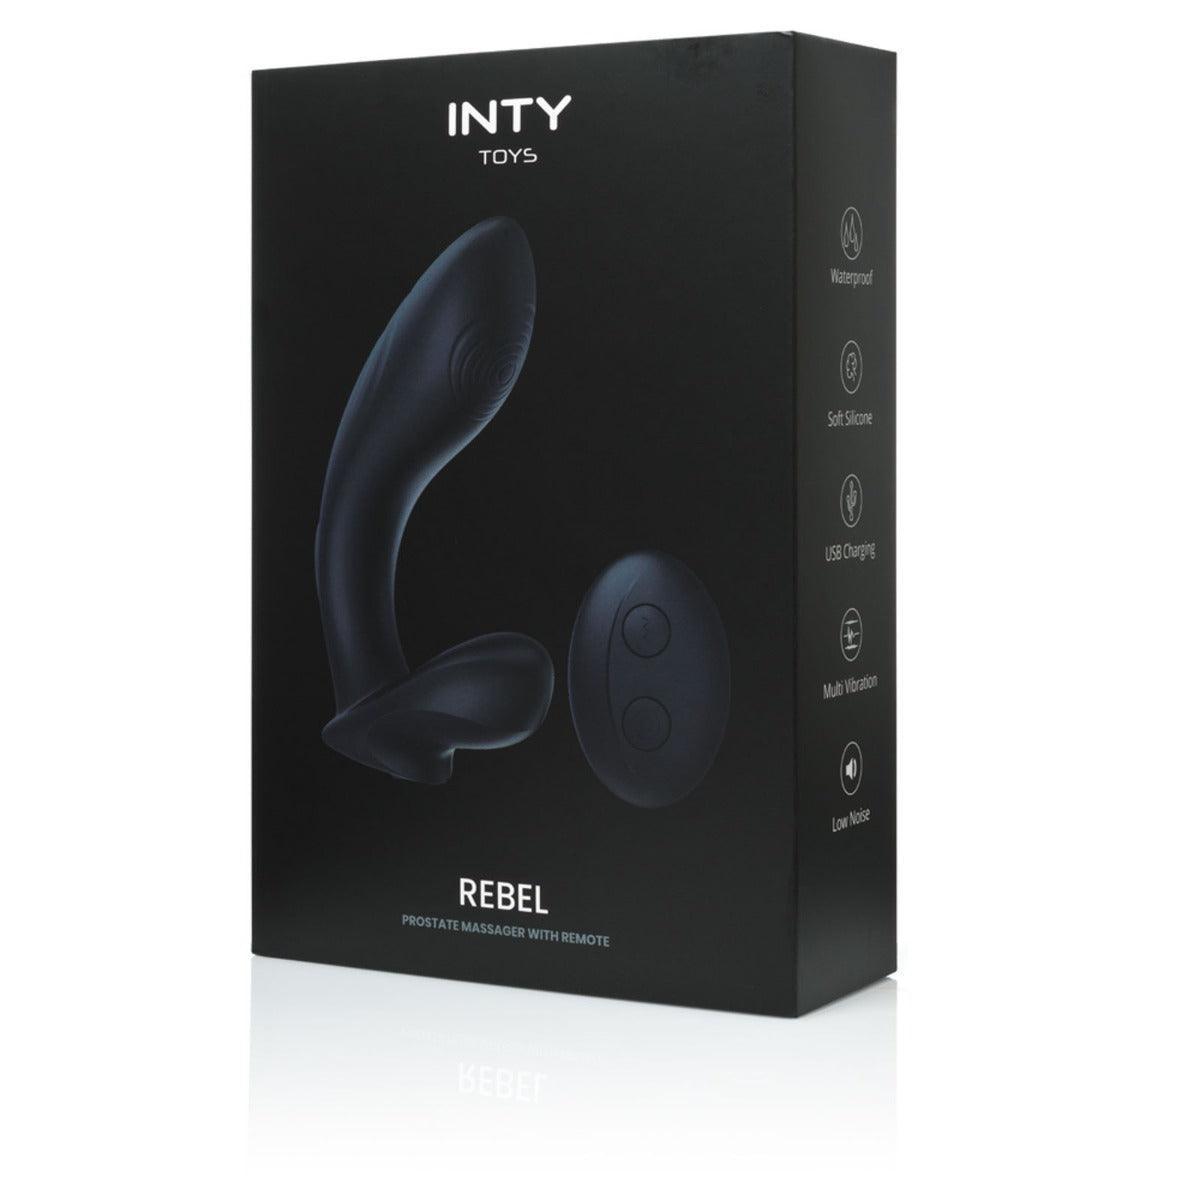 INTY Toys - Rebel Prostate Massager Vibrator with Remote Black